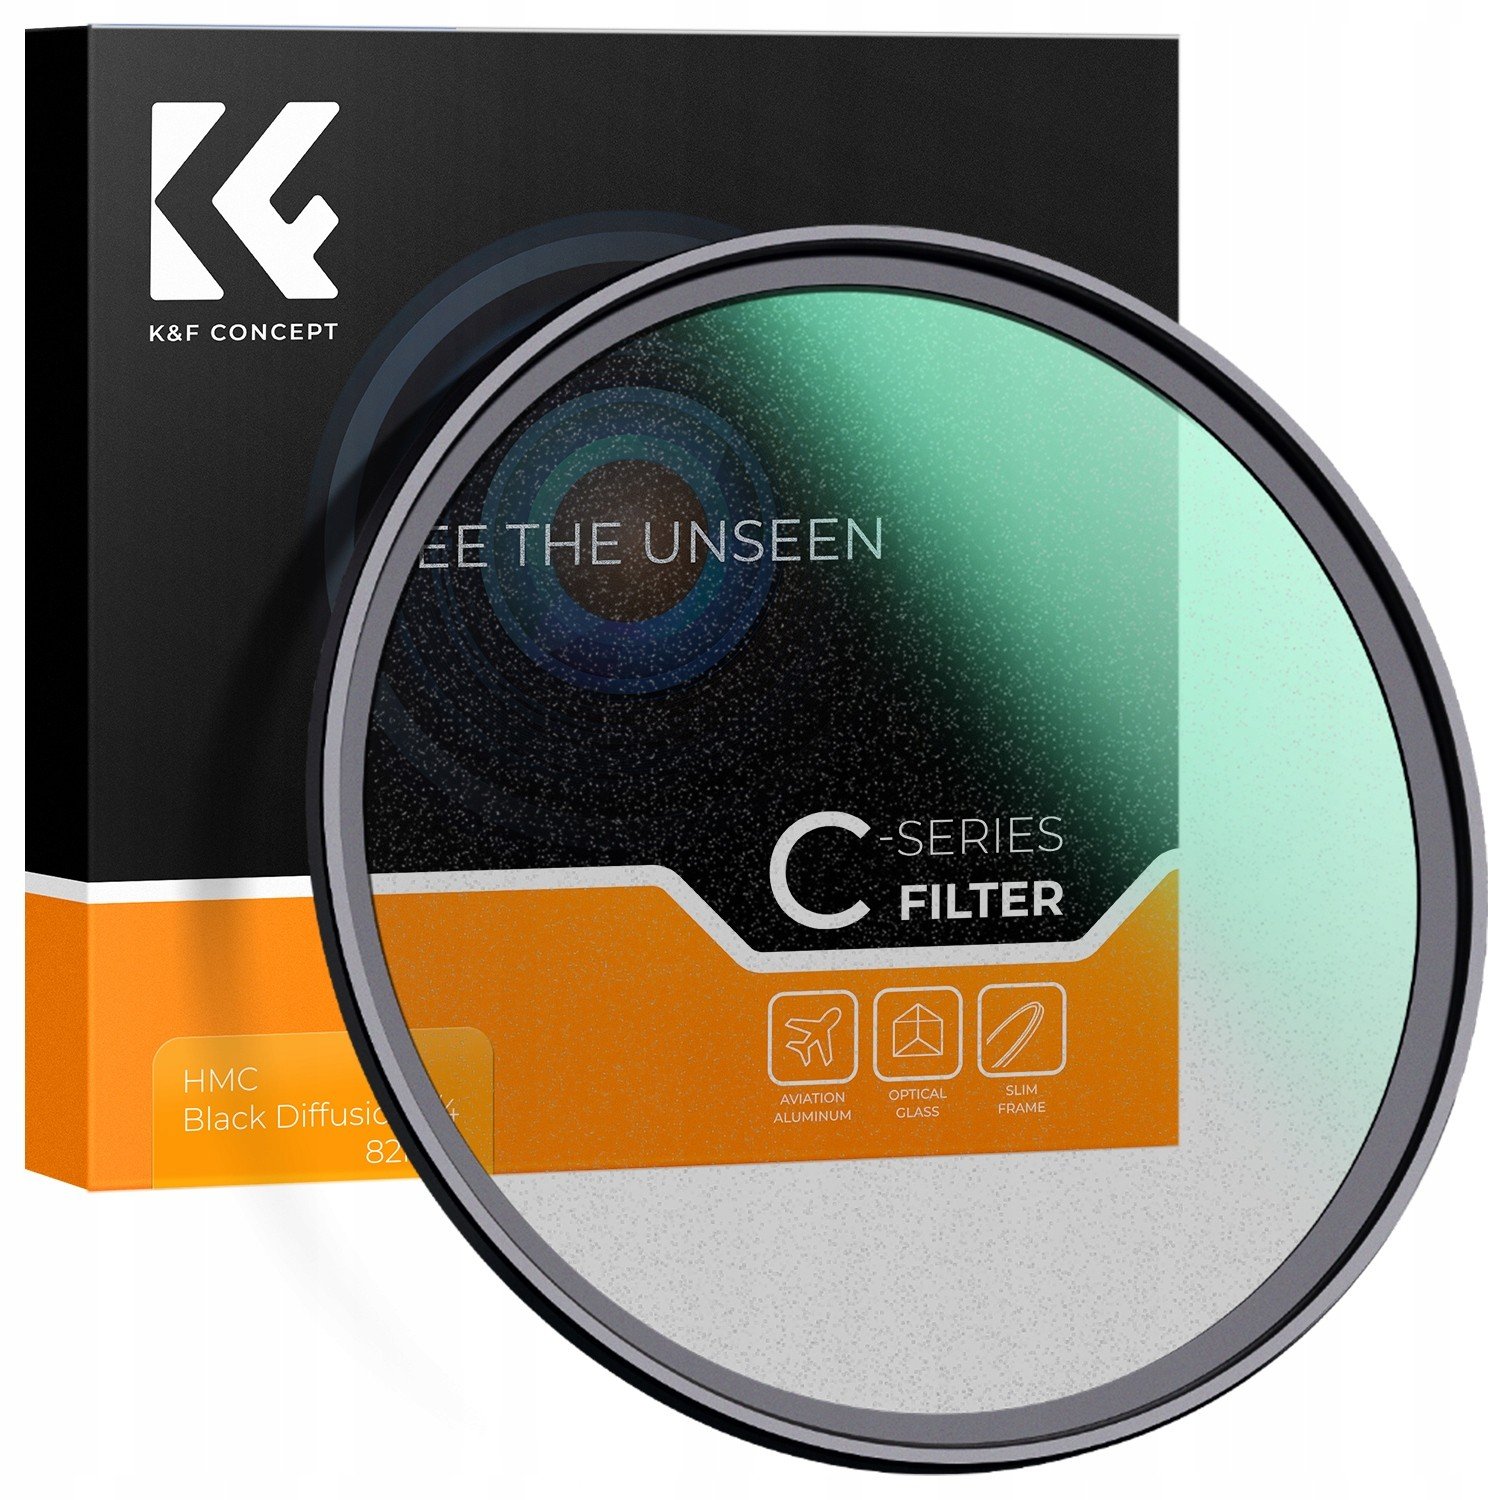 Difuzní filtr Black Mist 1/4 72mm Nano-C K&f